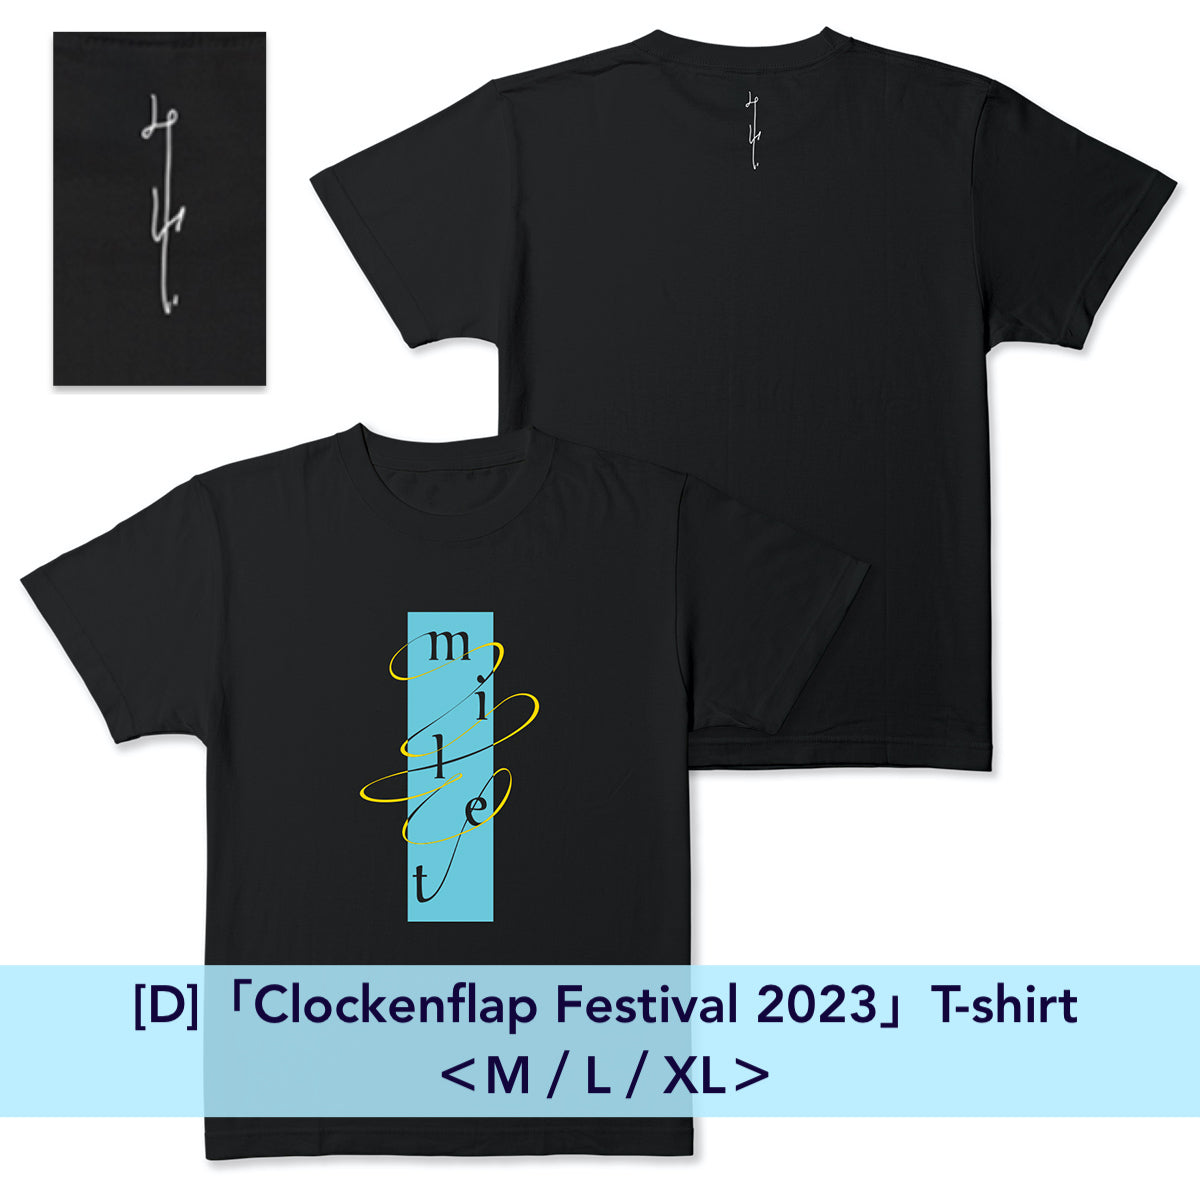 milet Live「Hey Taipei, I'm milet」& 「Clockenflap Festival 2023」官方周邊商品預購